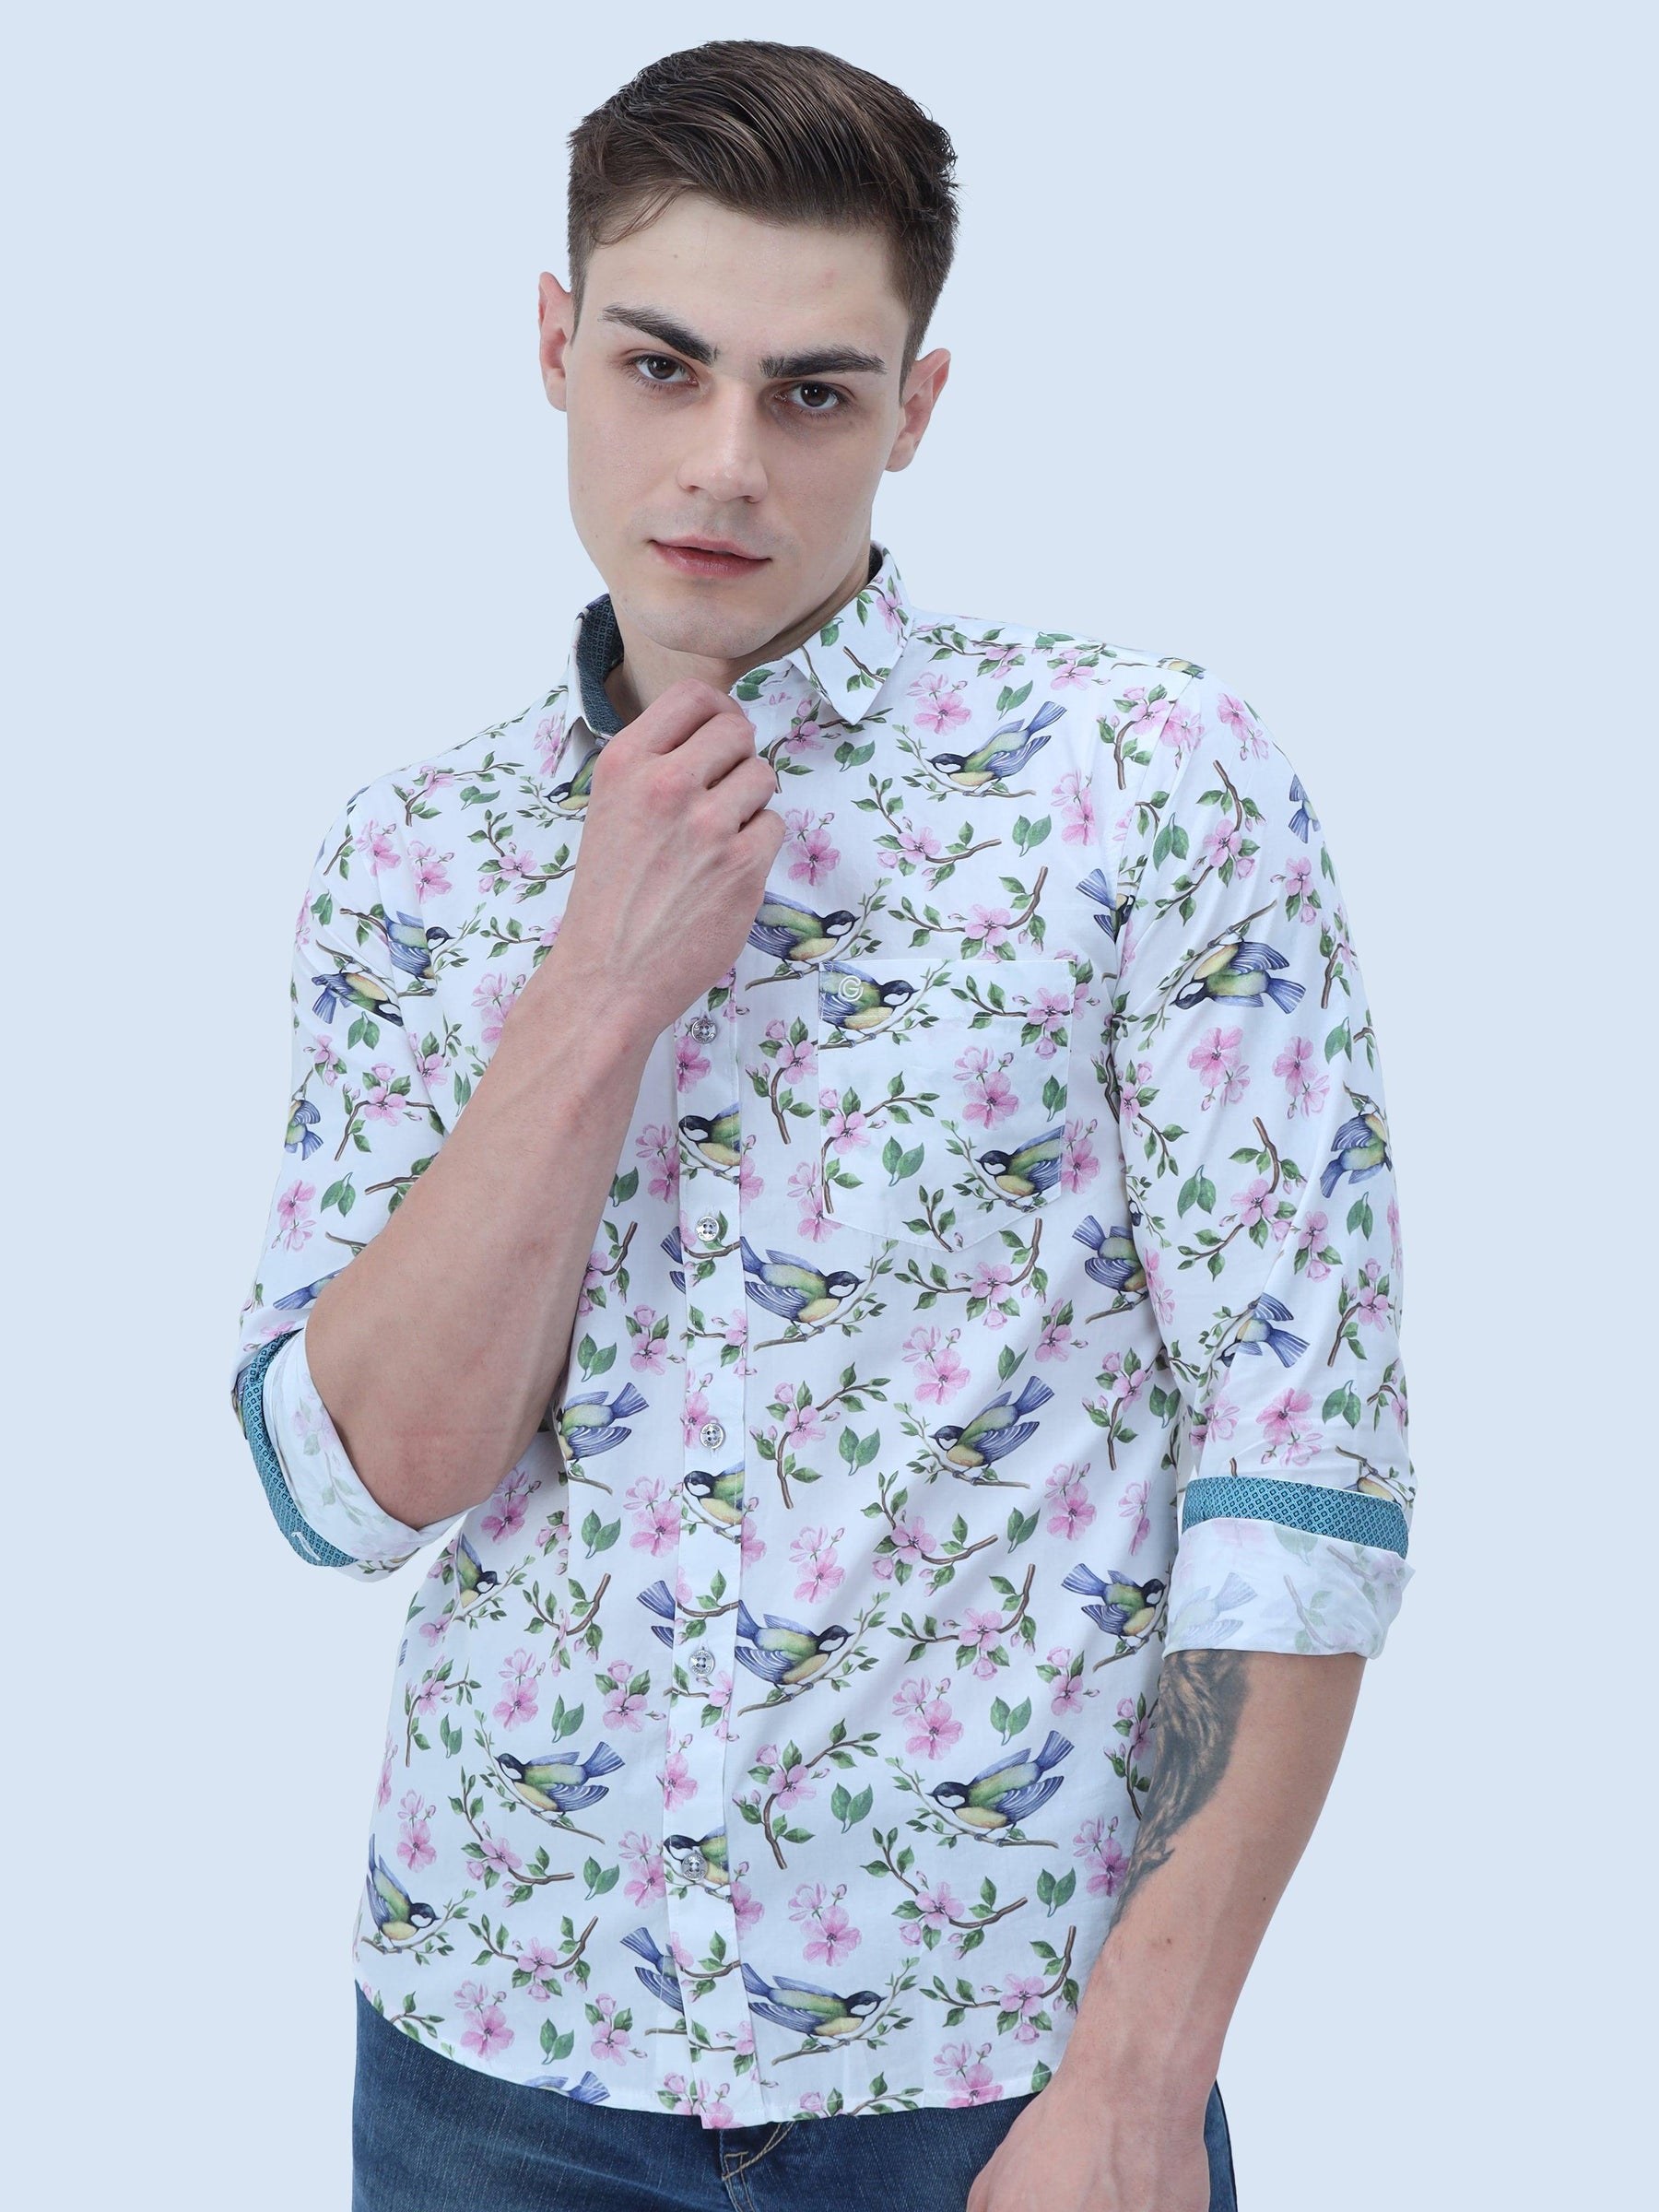 Hummy Bird Digital Printed Full Shirt - Guniaa Fashions